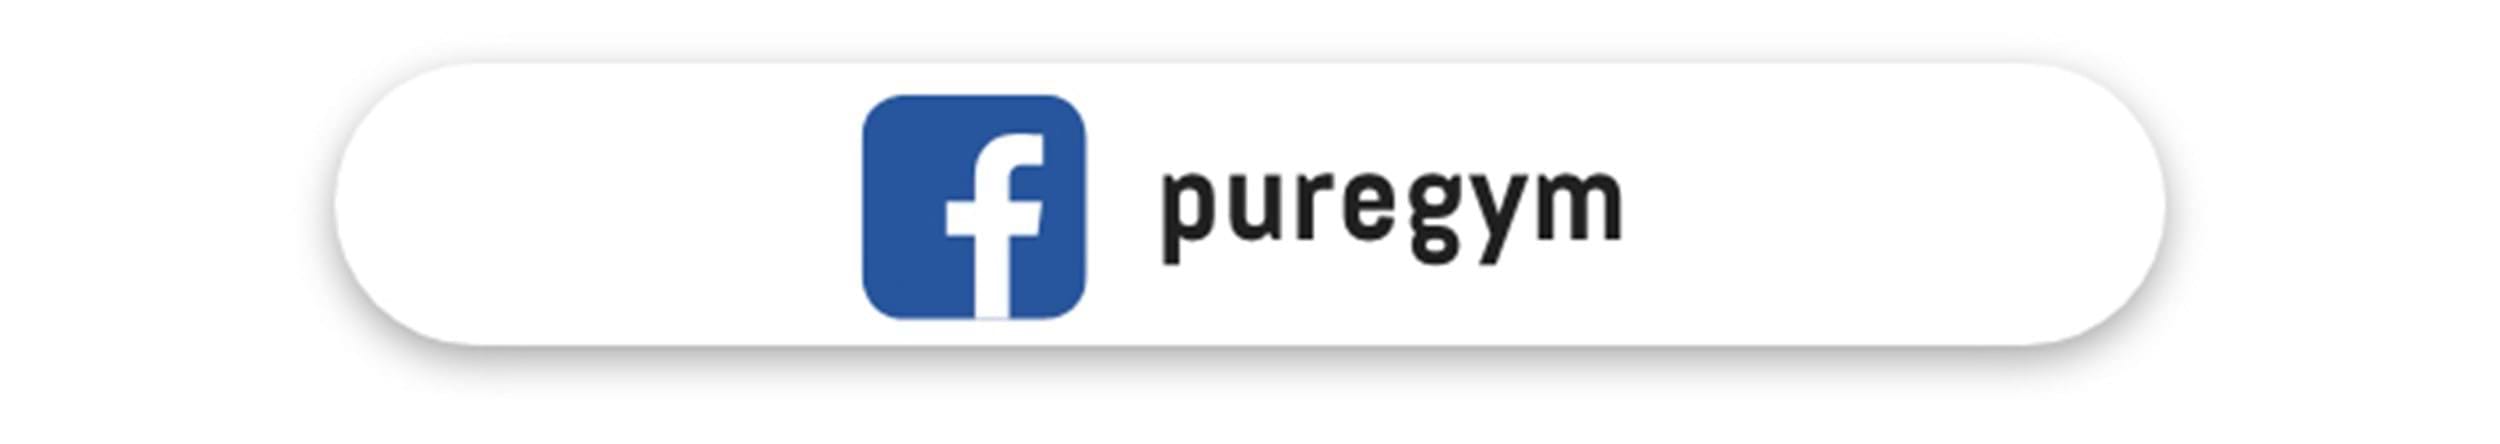 PureGym Facebook